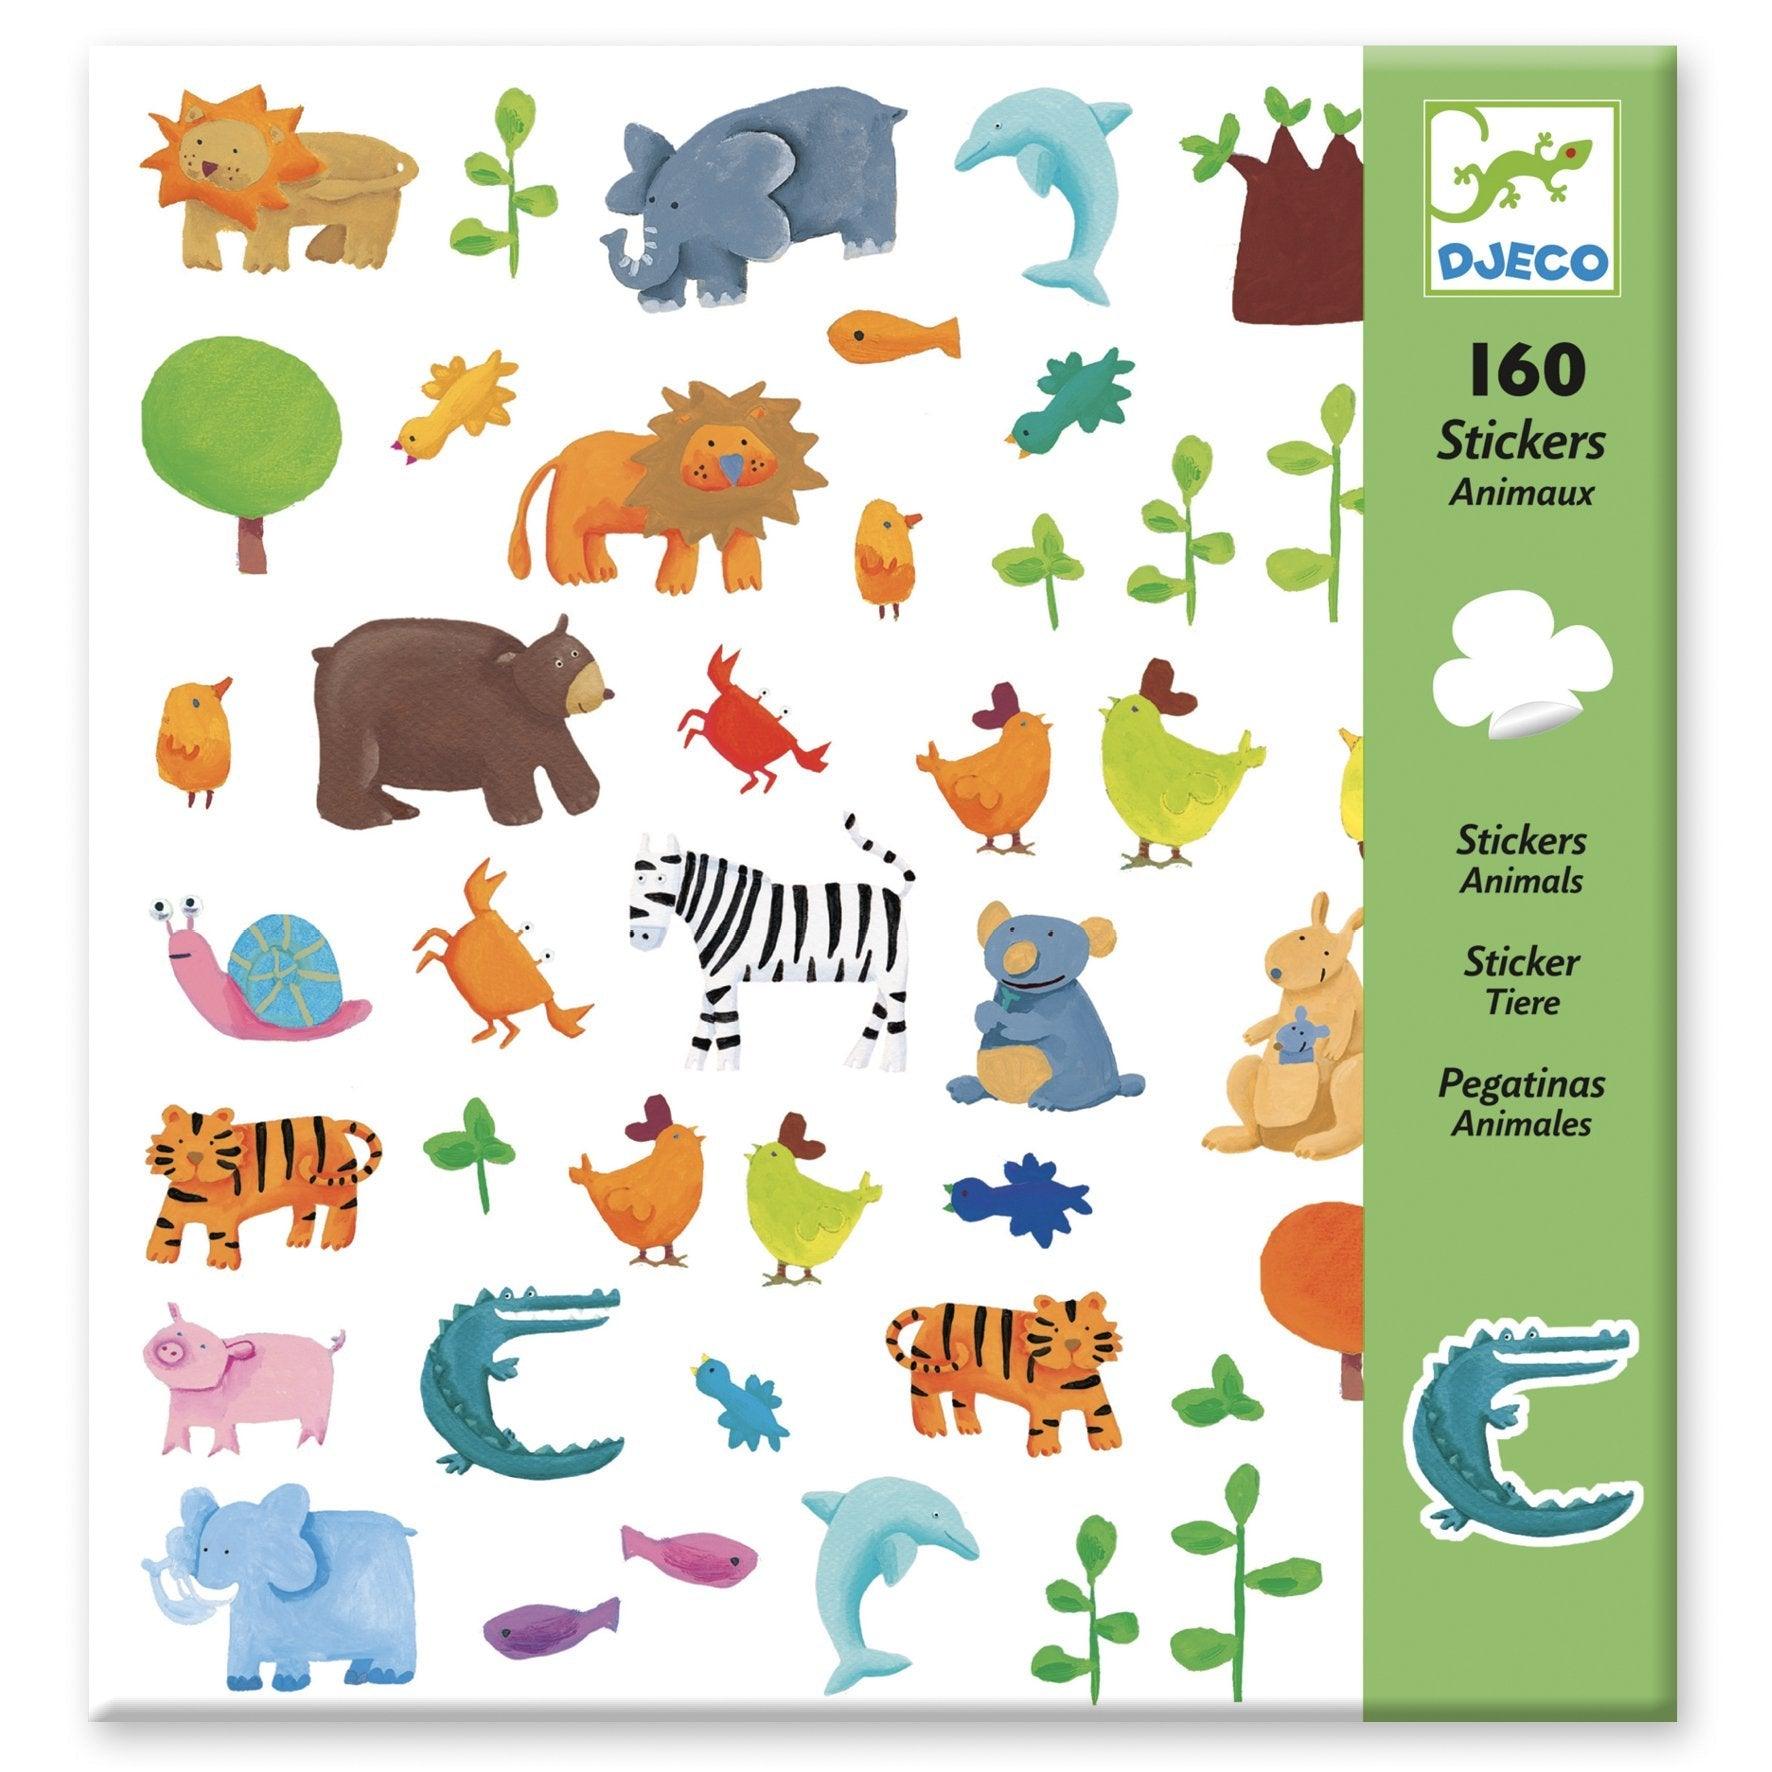 Djeco: naklejki 160 Stickers - Noski Noski